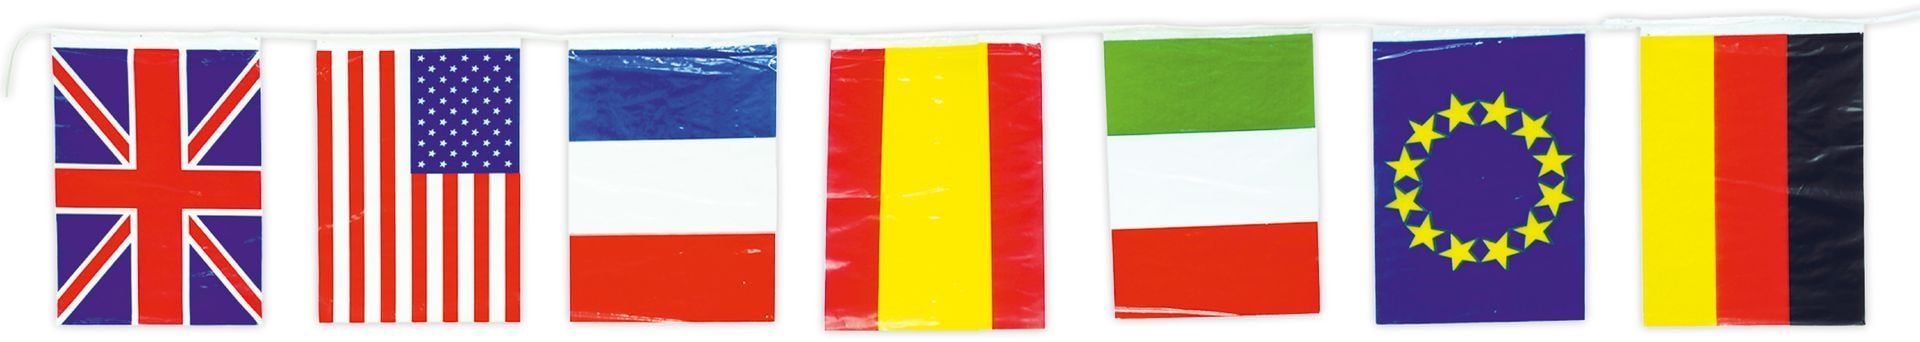 Slinger WK voetbal vlaggen